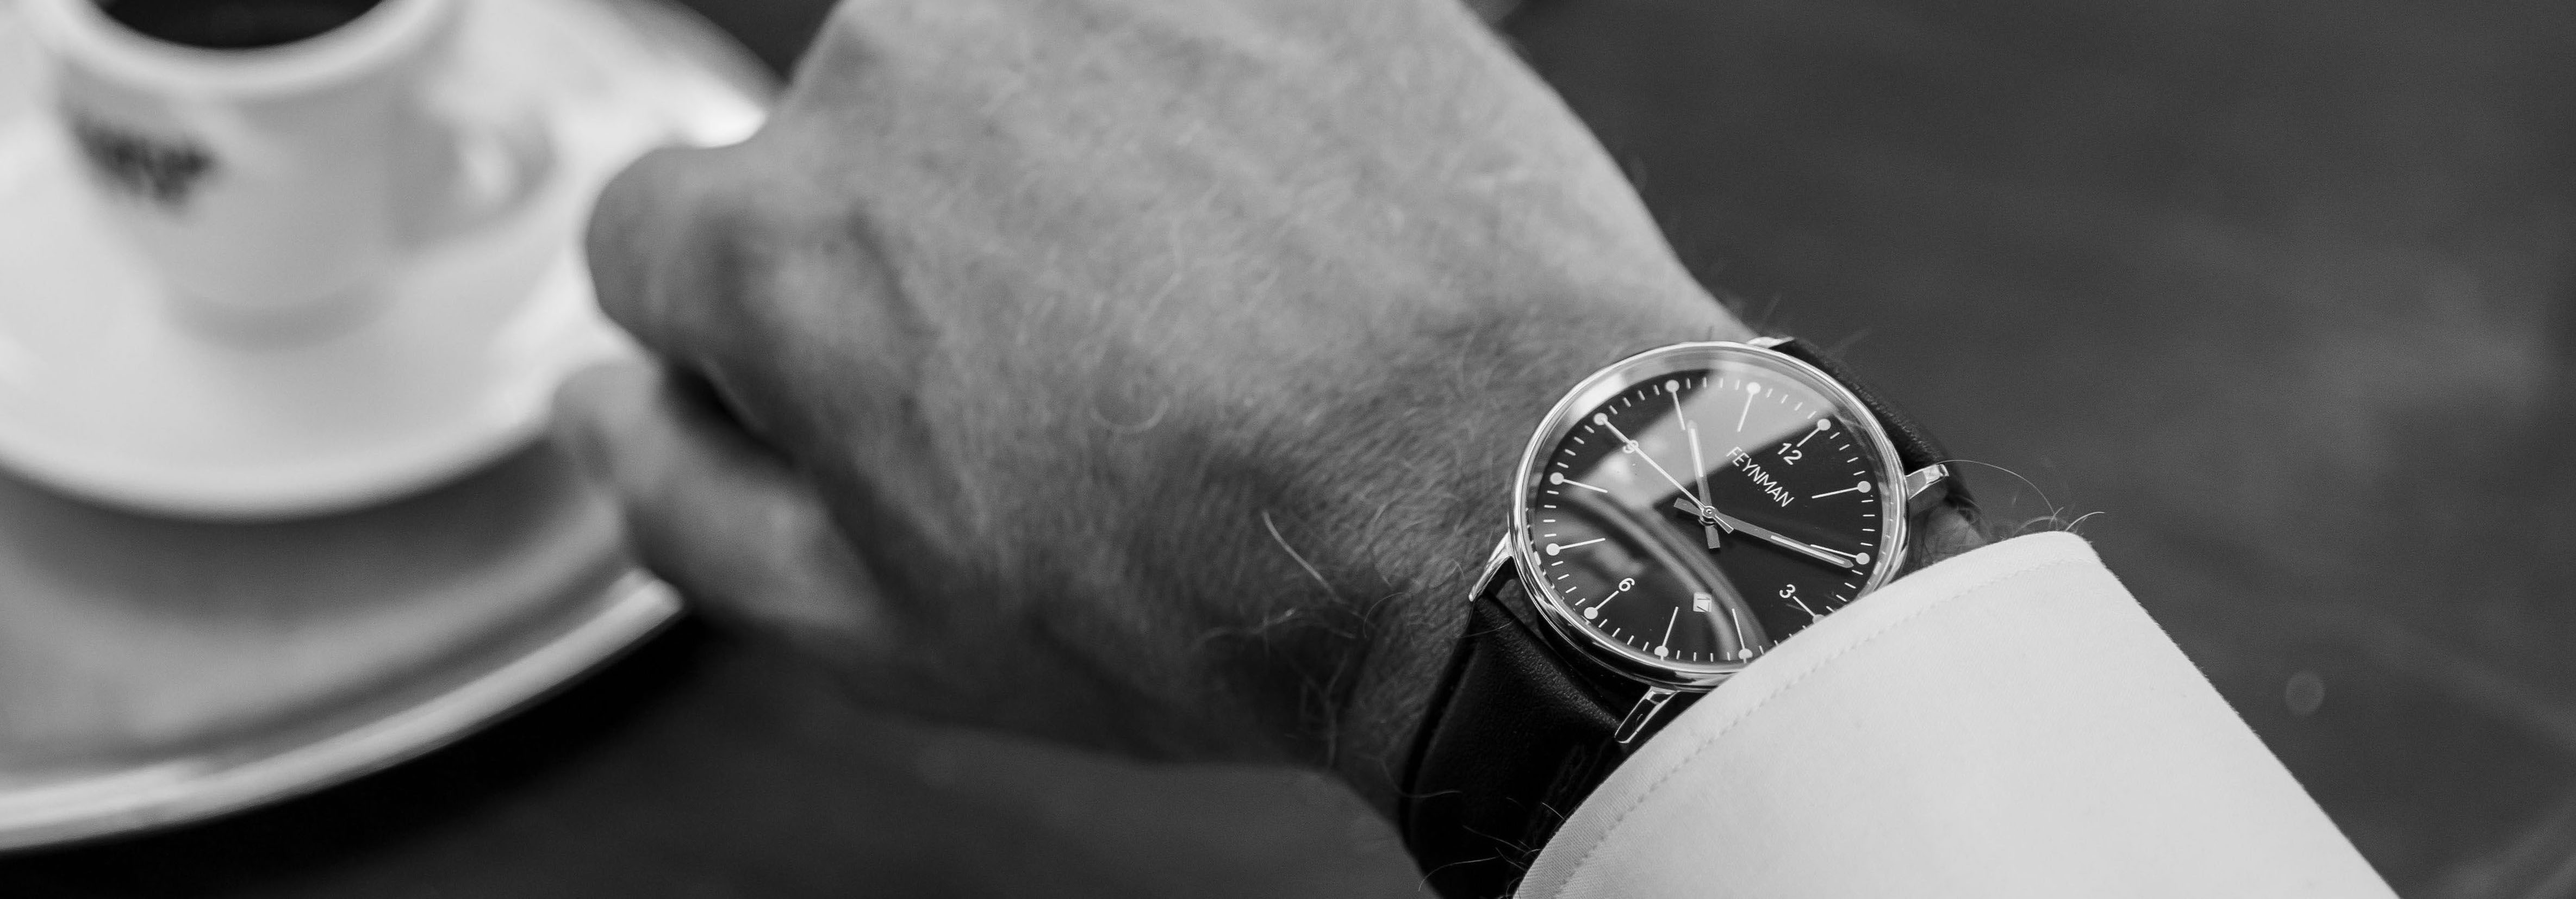 Photo of a hand wearing a Feynman CWII wristwatch